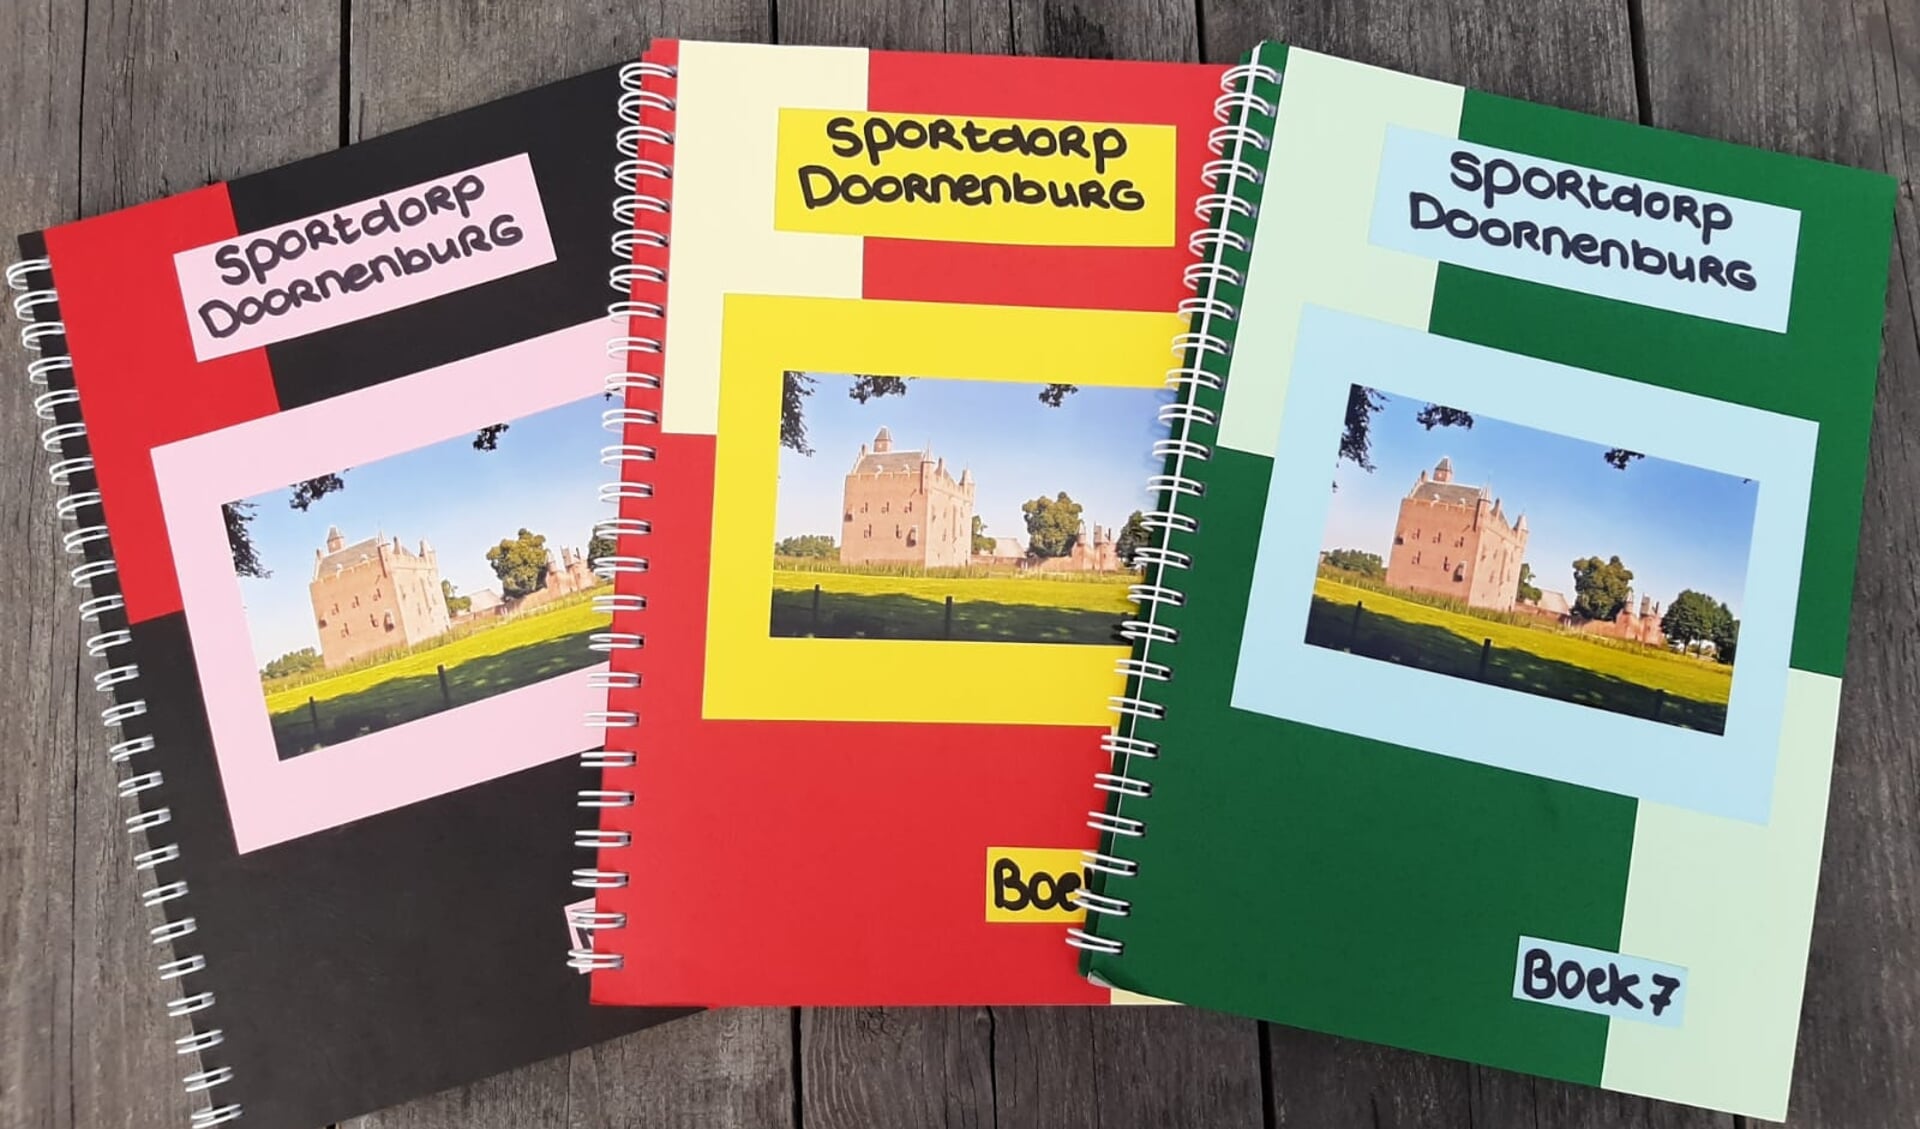 Inspiratieboeken van Sportdorp Doornenburg. (foto: Rianne Raijmann)